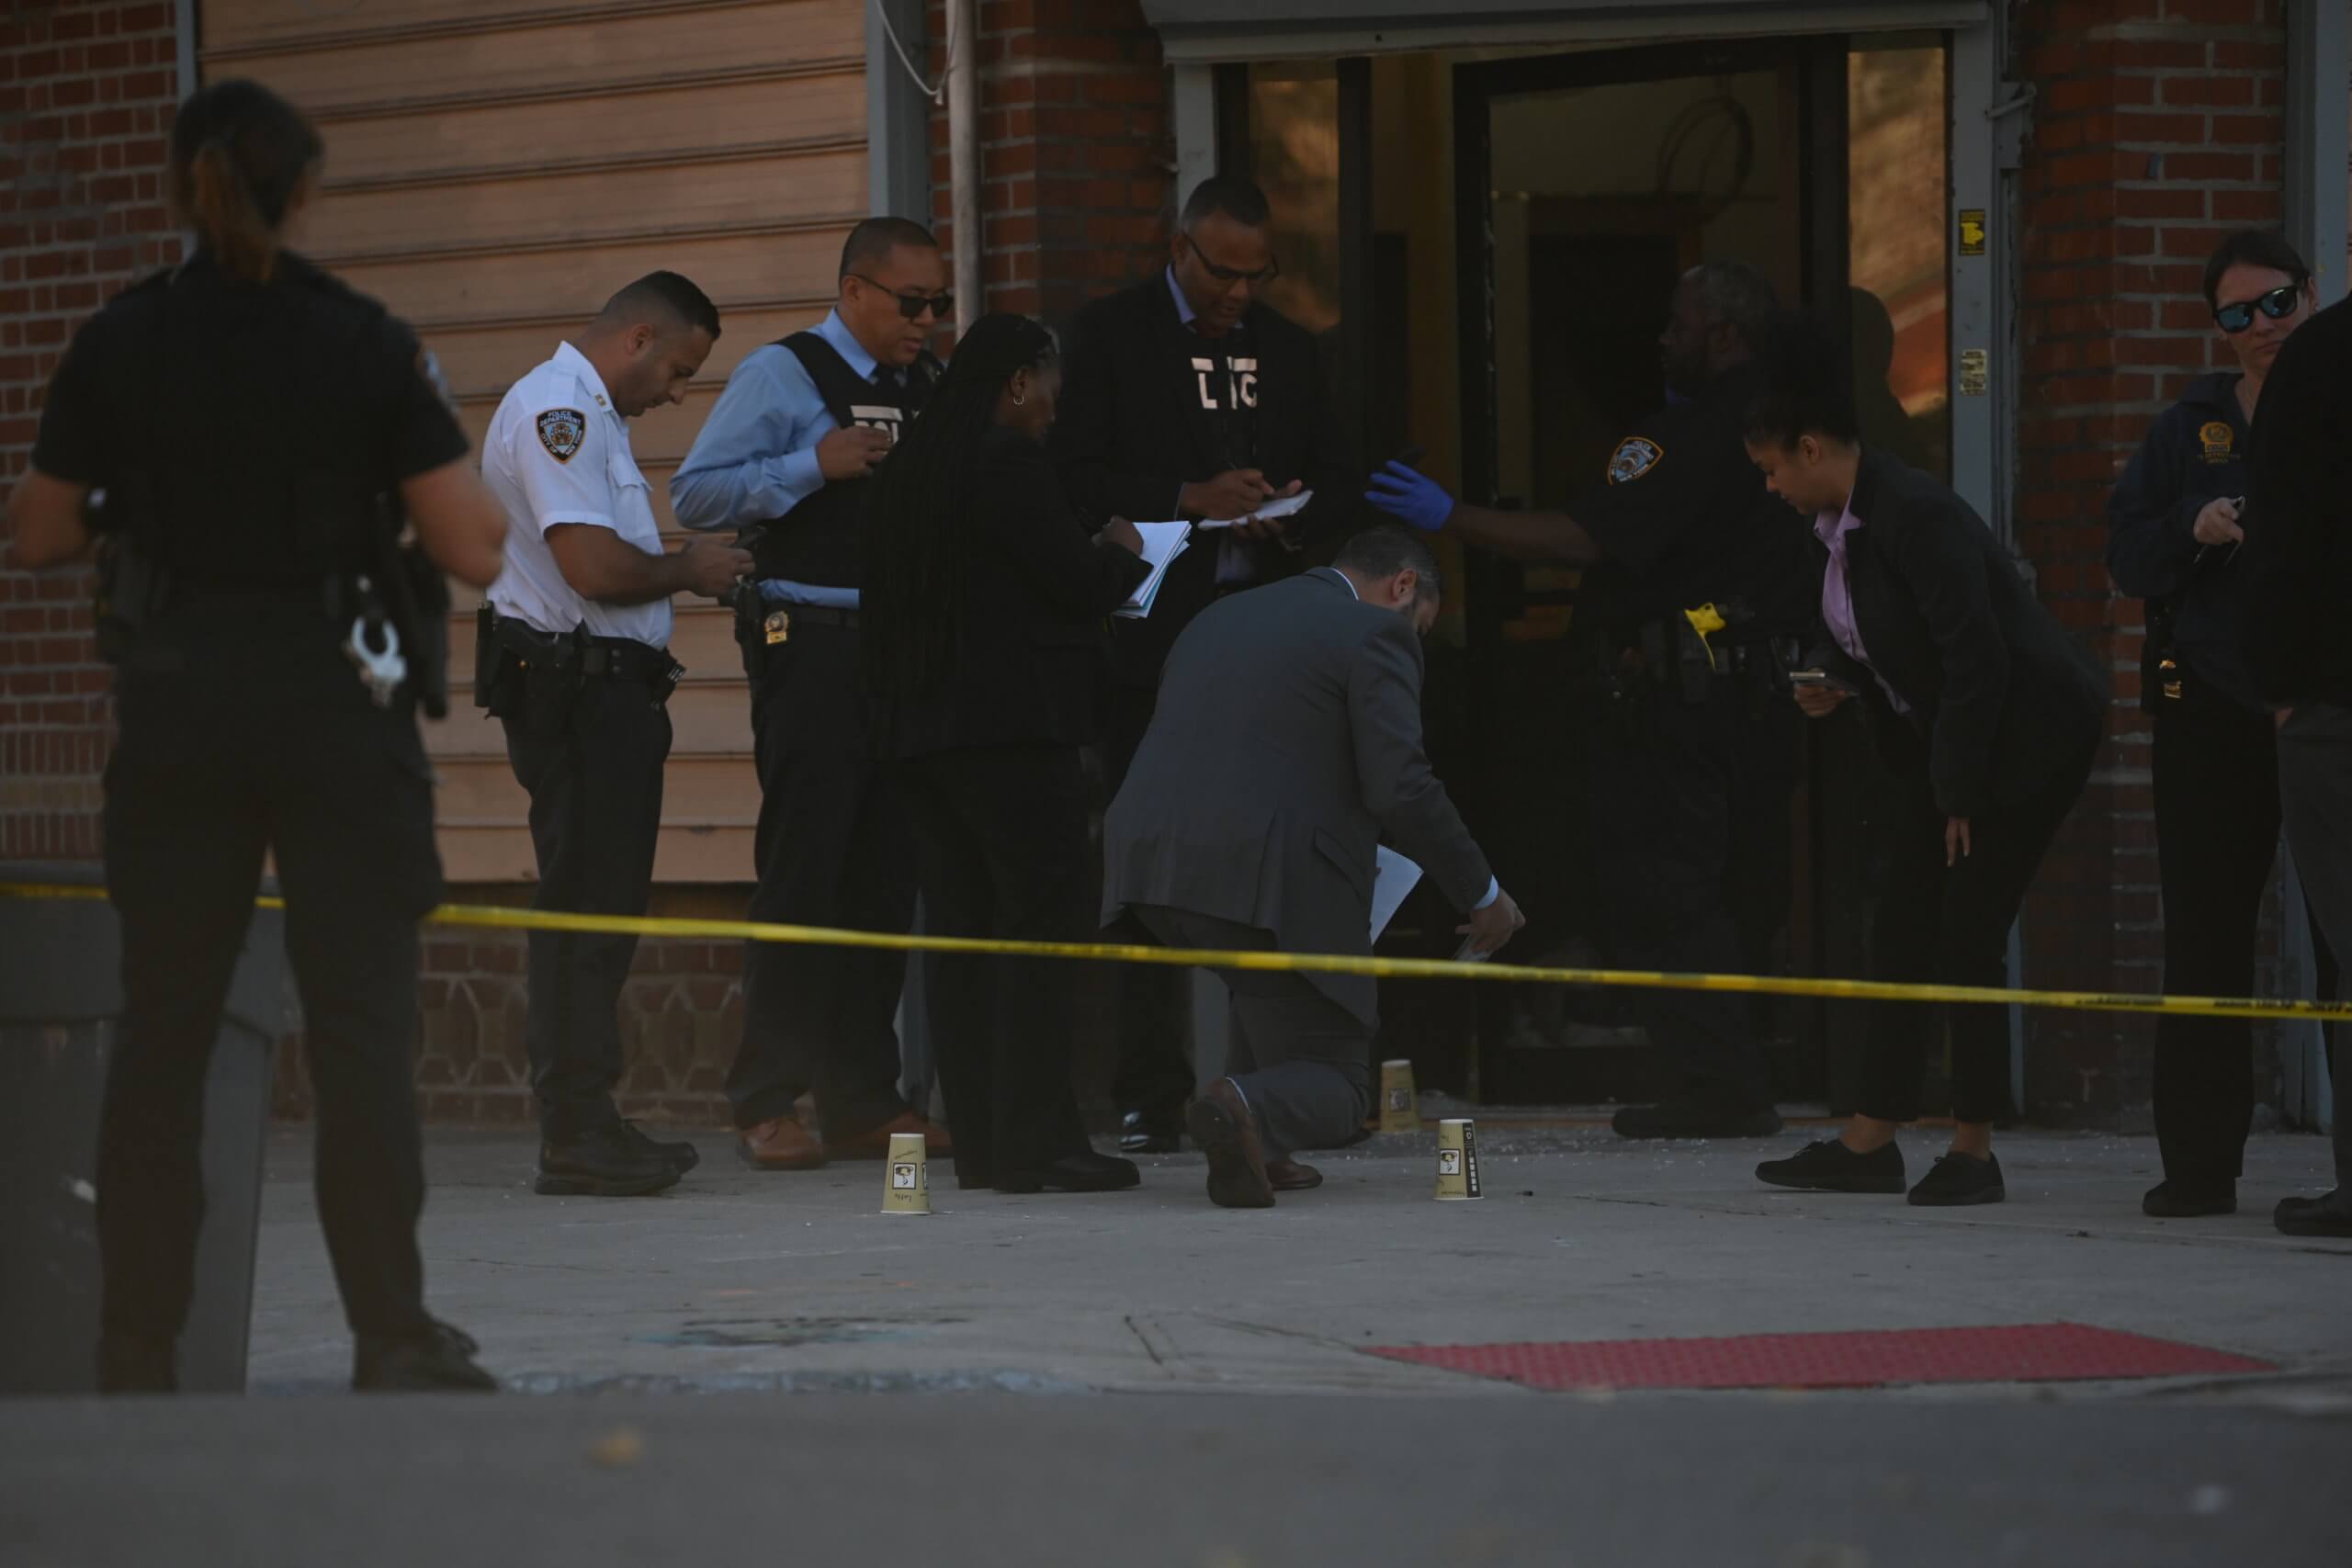 cops mark bullets at brownsville restaurant shooting